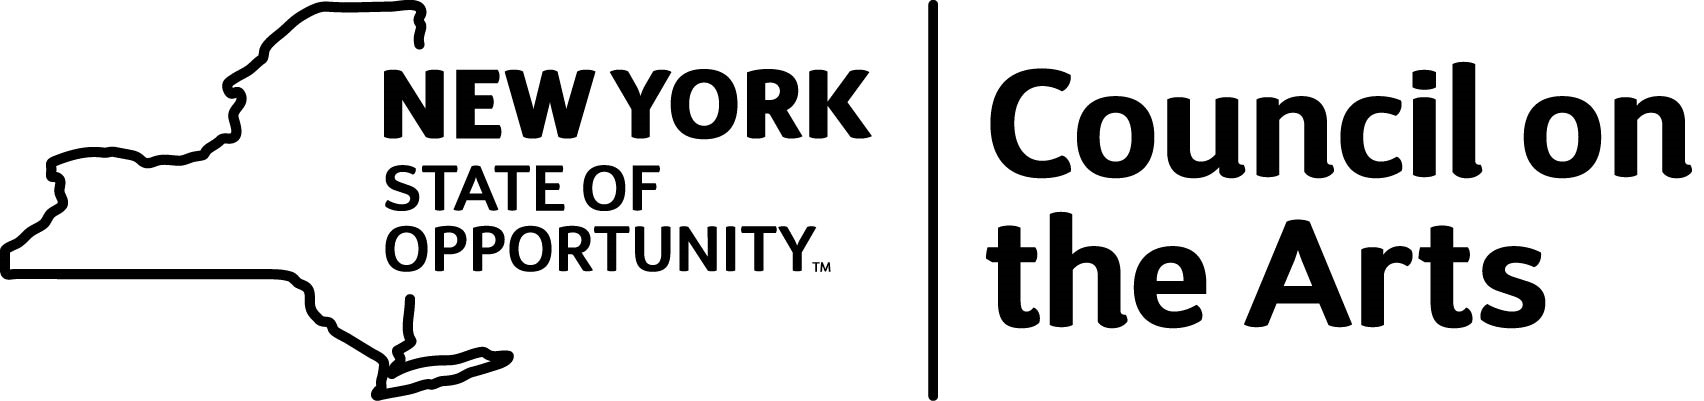 NYSCA Logo - Black (1).jpg